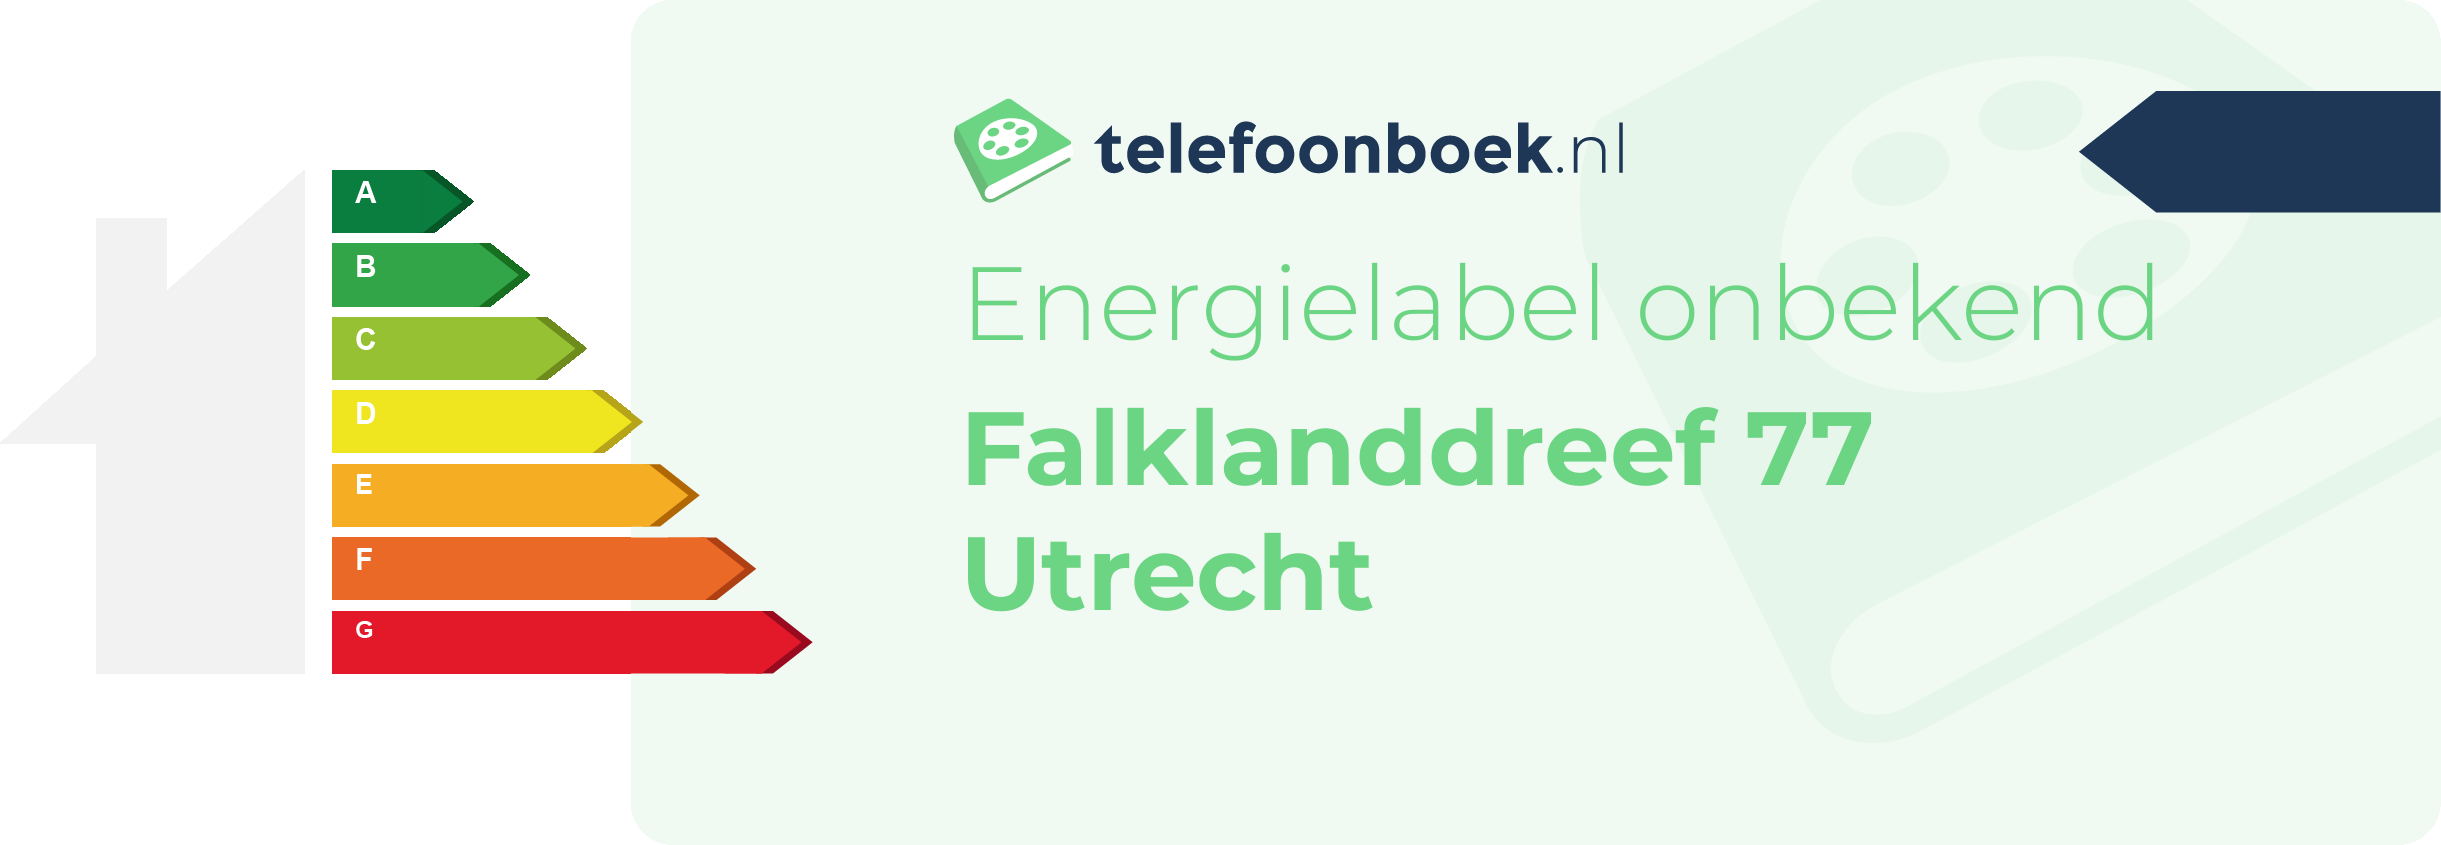 Energielabel Falklanddreef 77 Utrecht